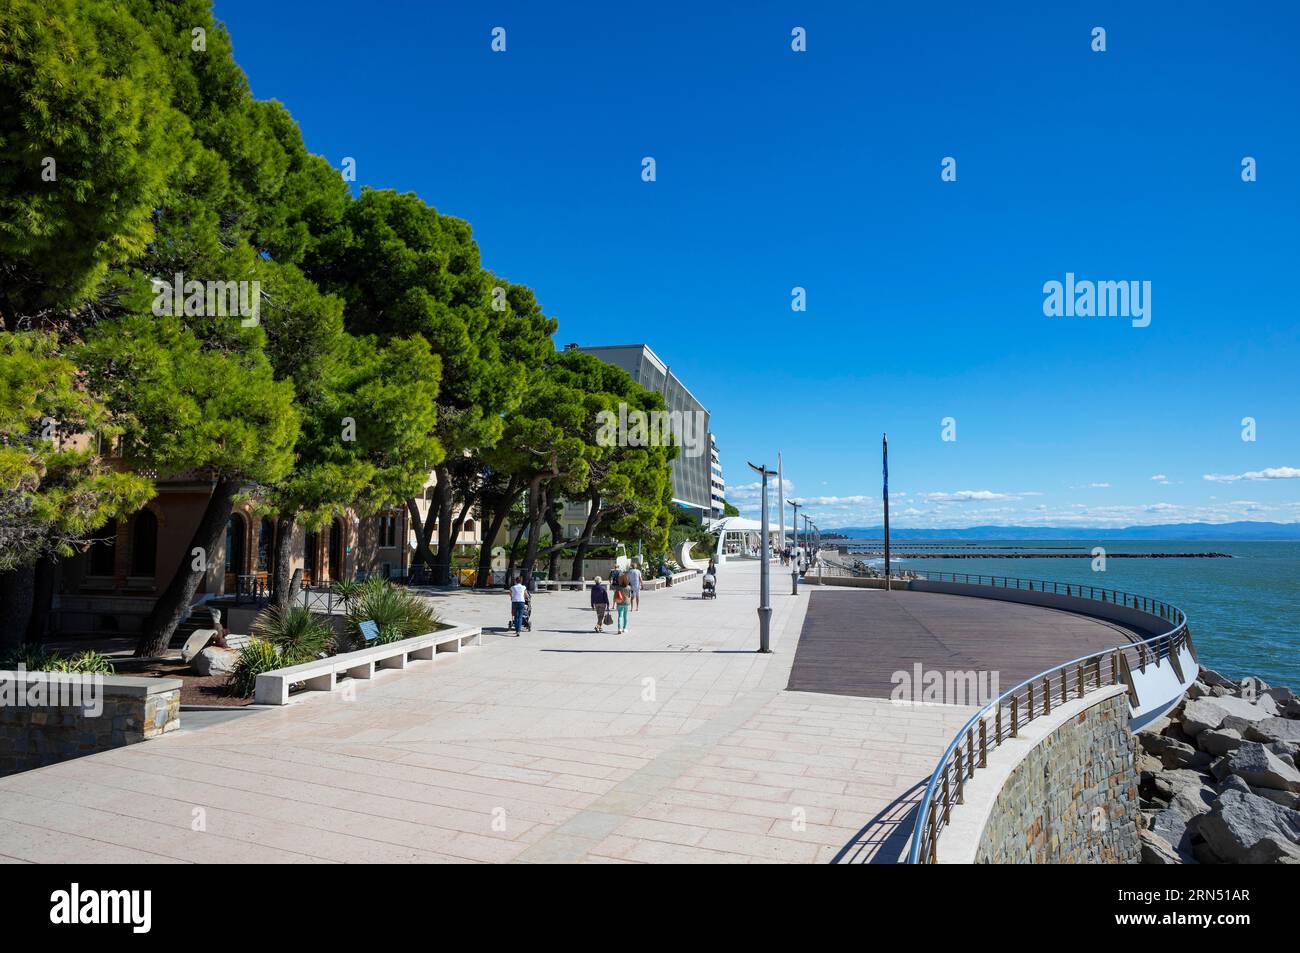 Nazario Sauro beach promenade, Grado, Friuli Venezia Giulia, Italy Stock Photo